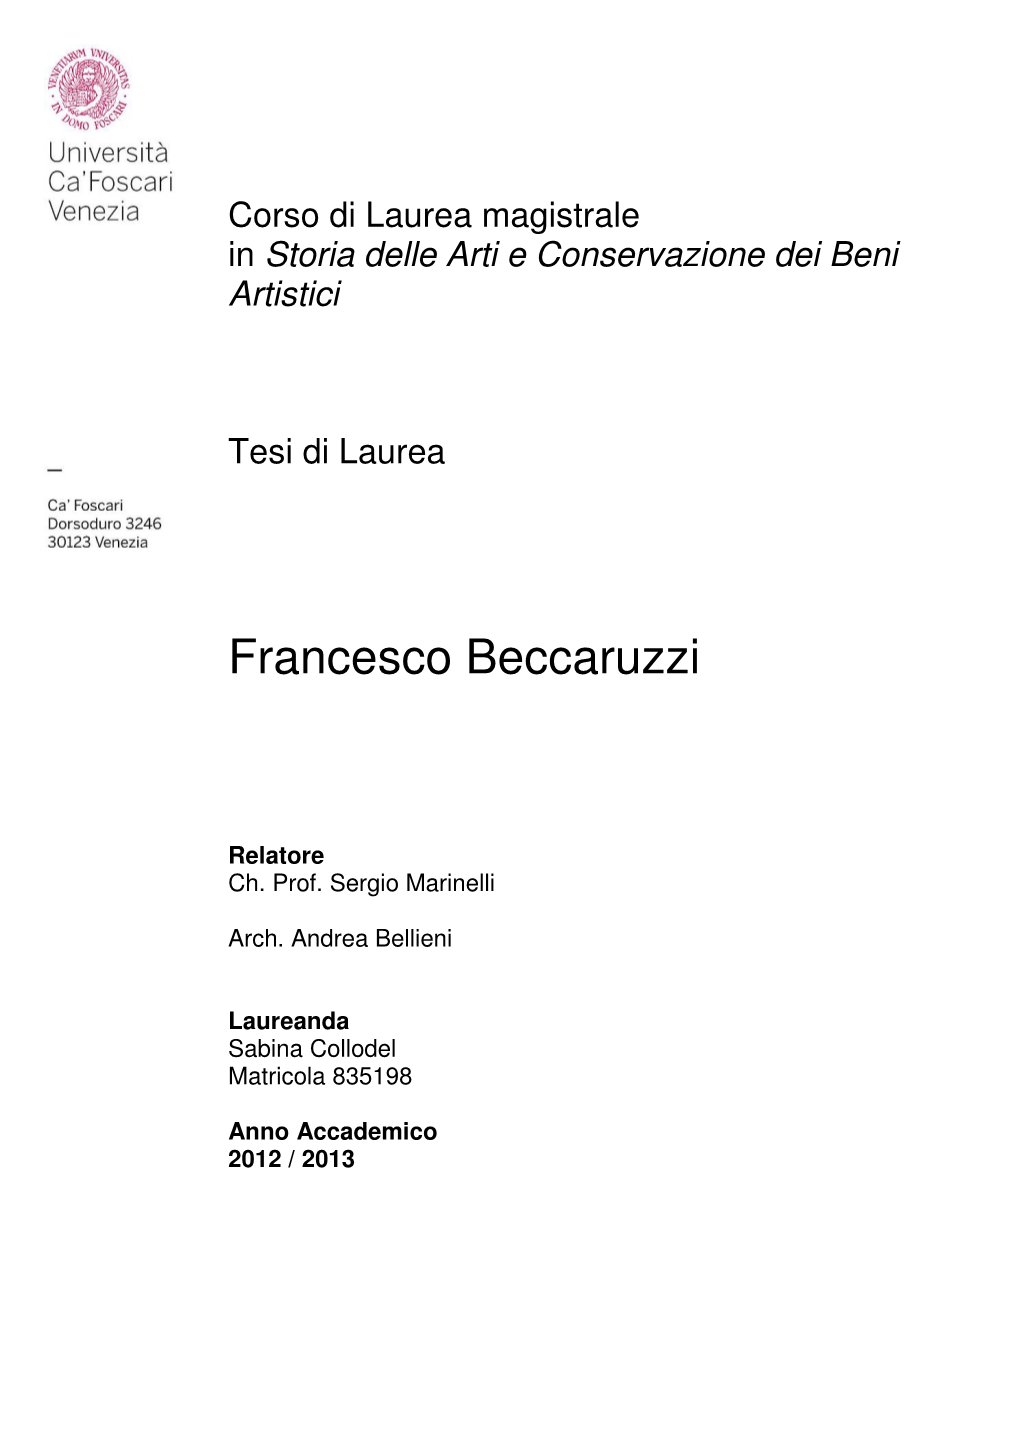 Francesco Beccaruzzi